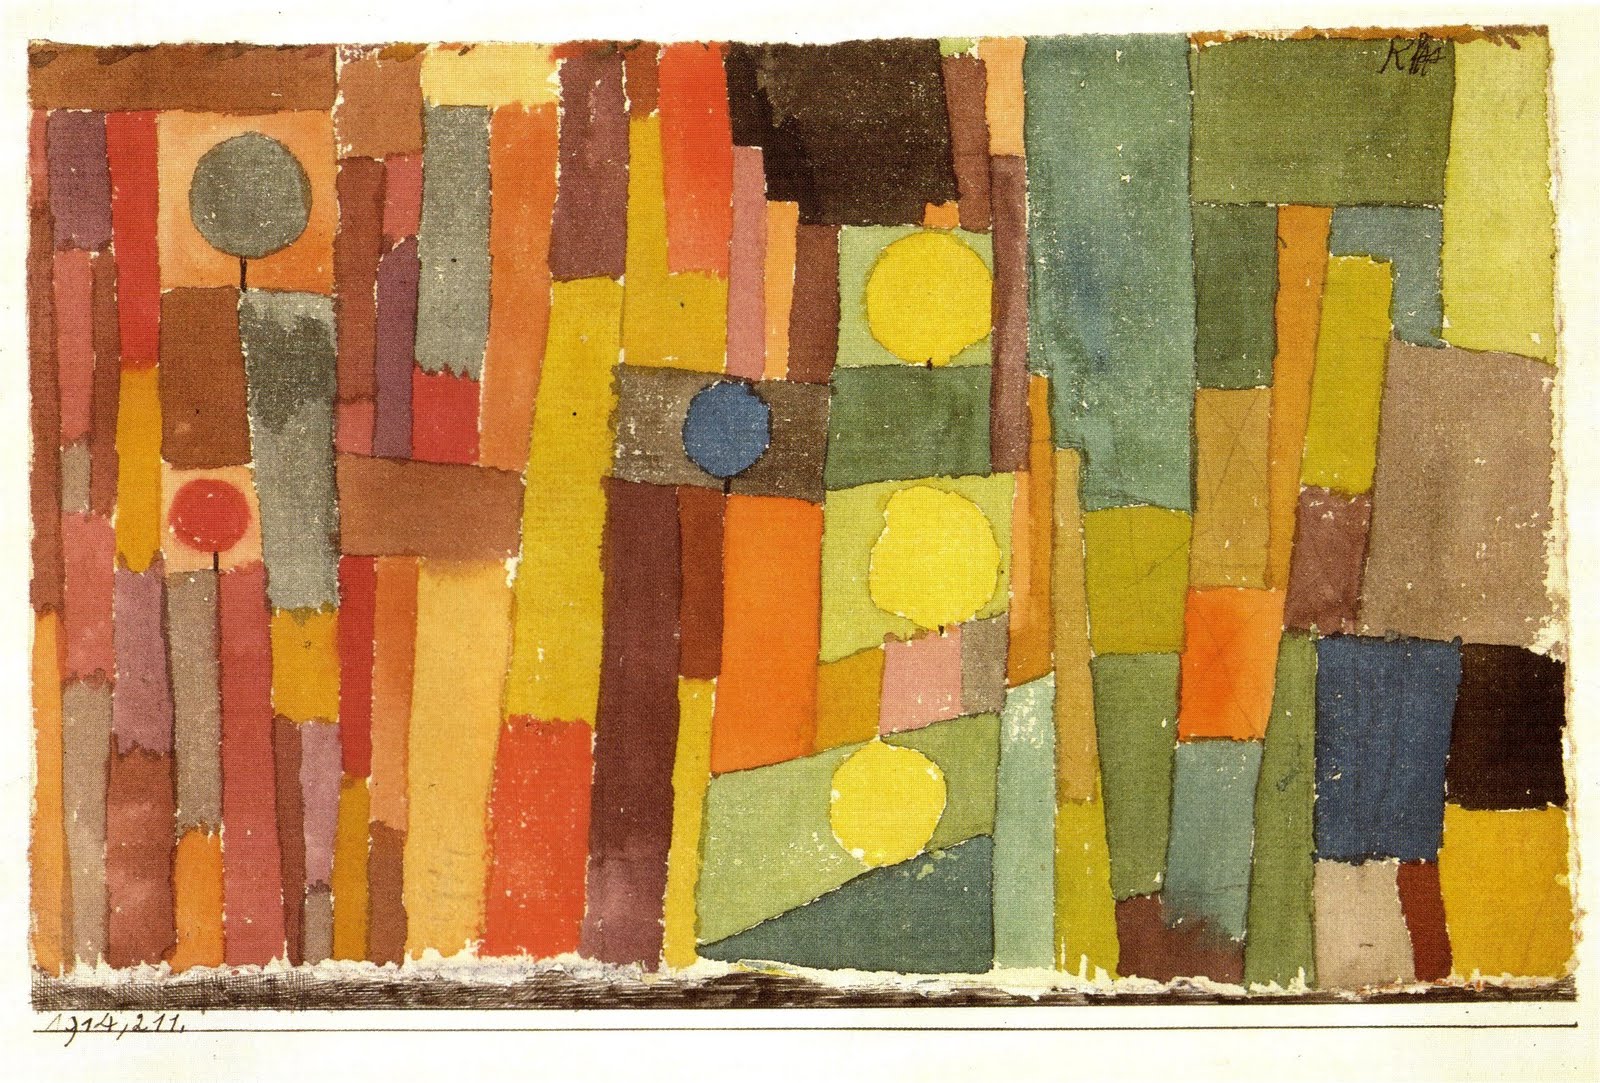 "In The Style Of Kairouan" Paul Klee